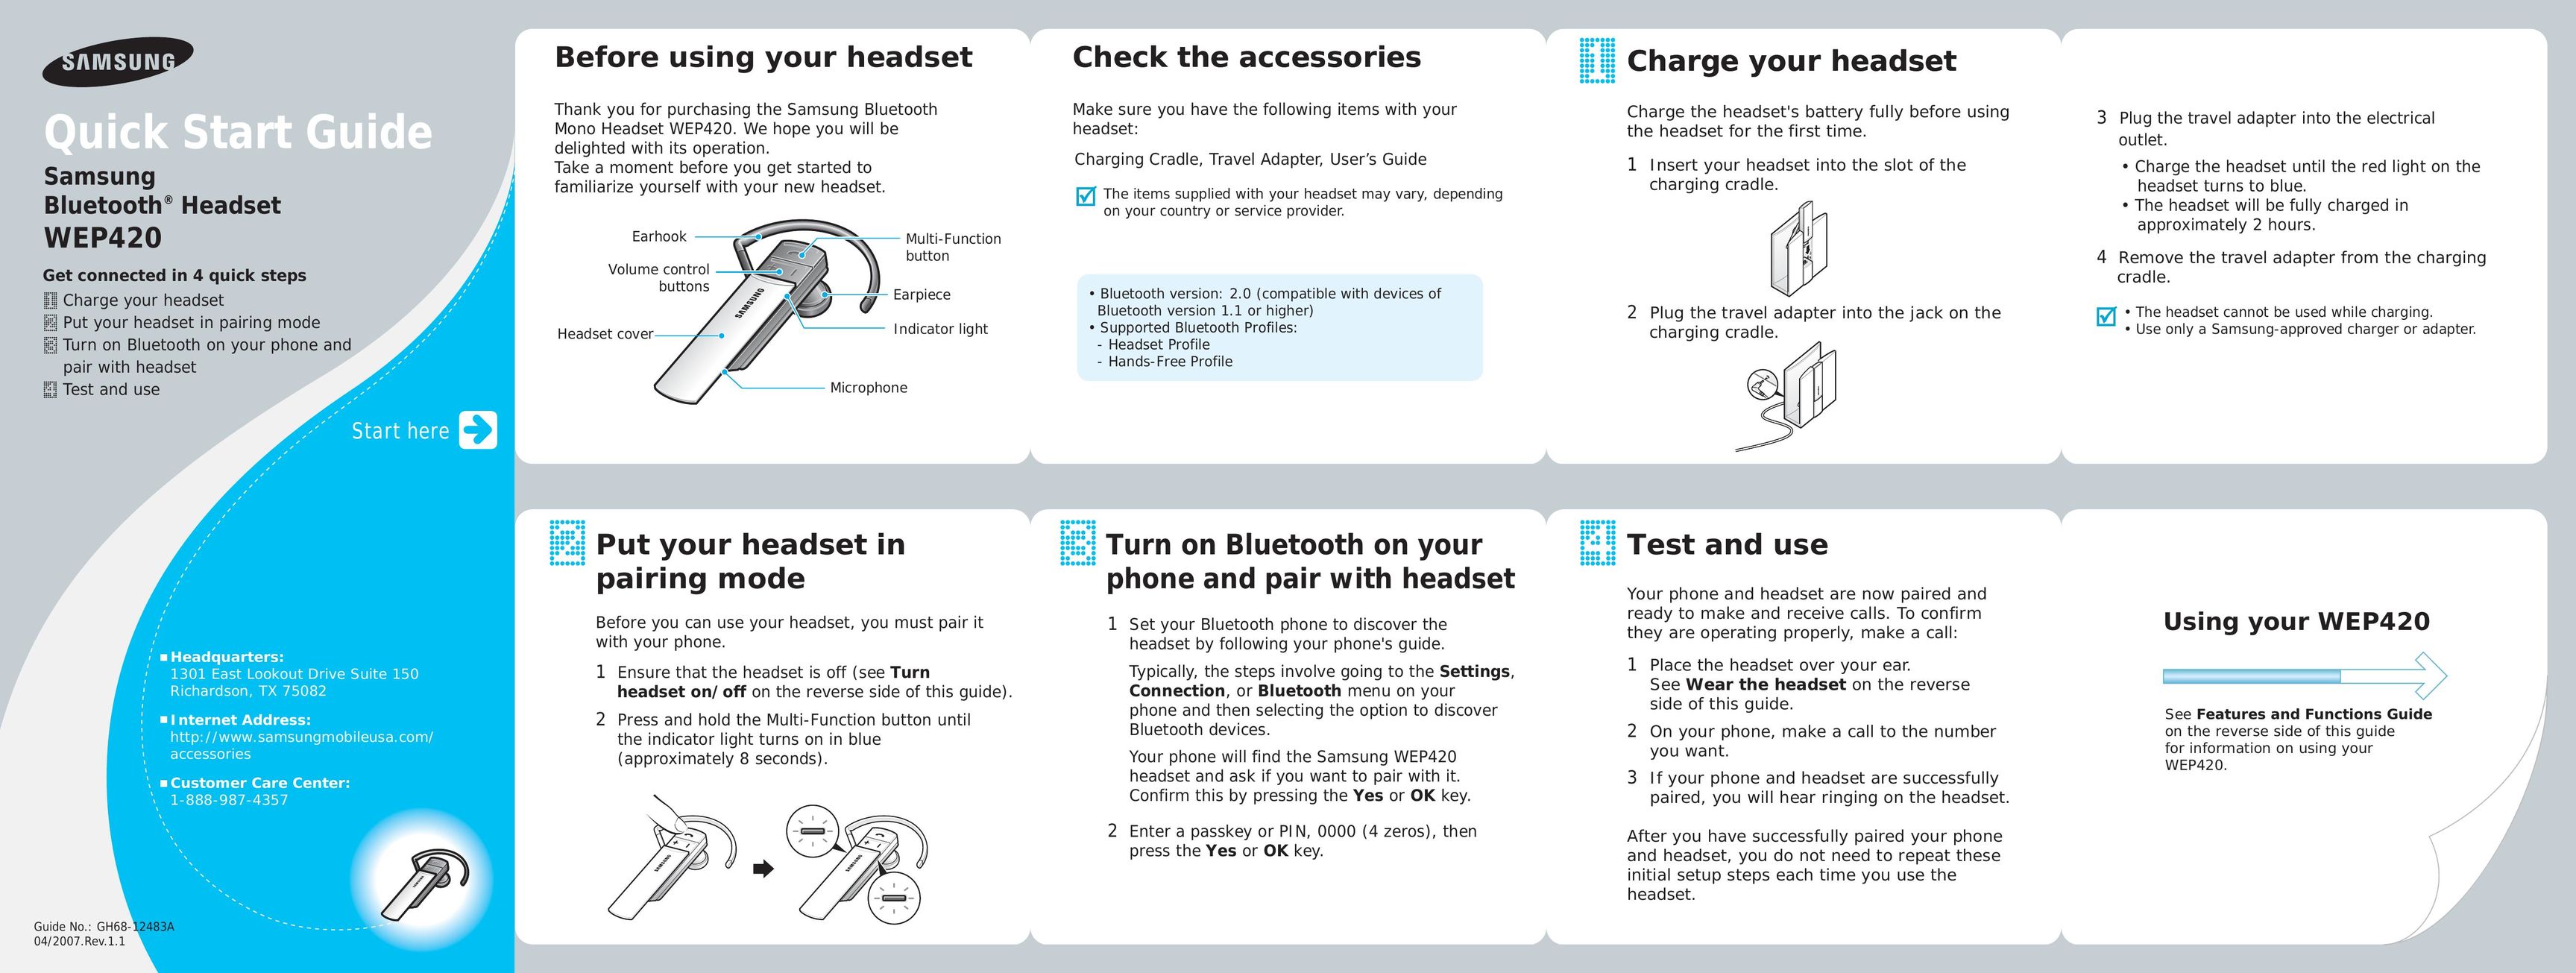 Samsung GH68-12483A Bluetooth Headset User Manual